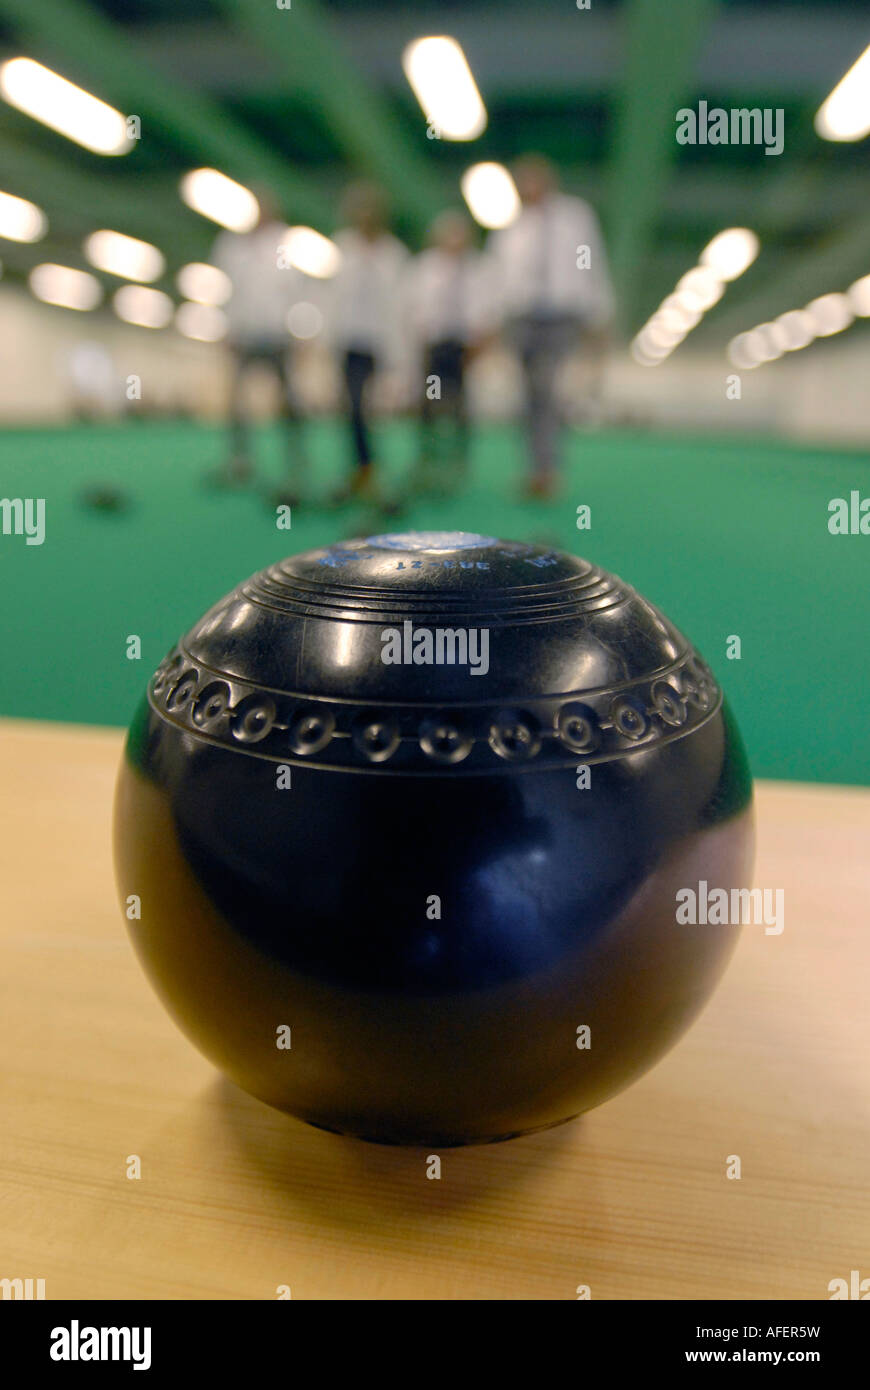 Bowling ball and bowlers at an indoor bowls green Stock Photo